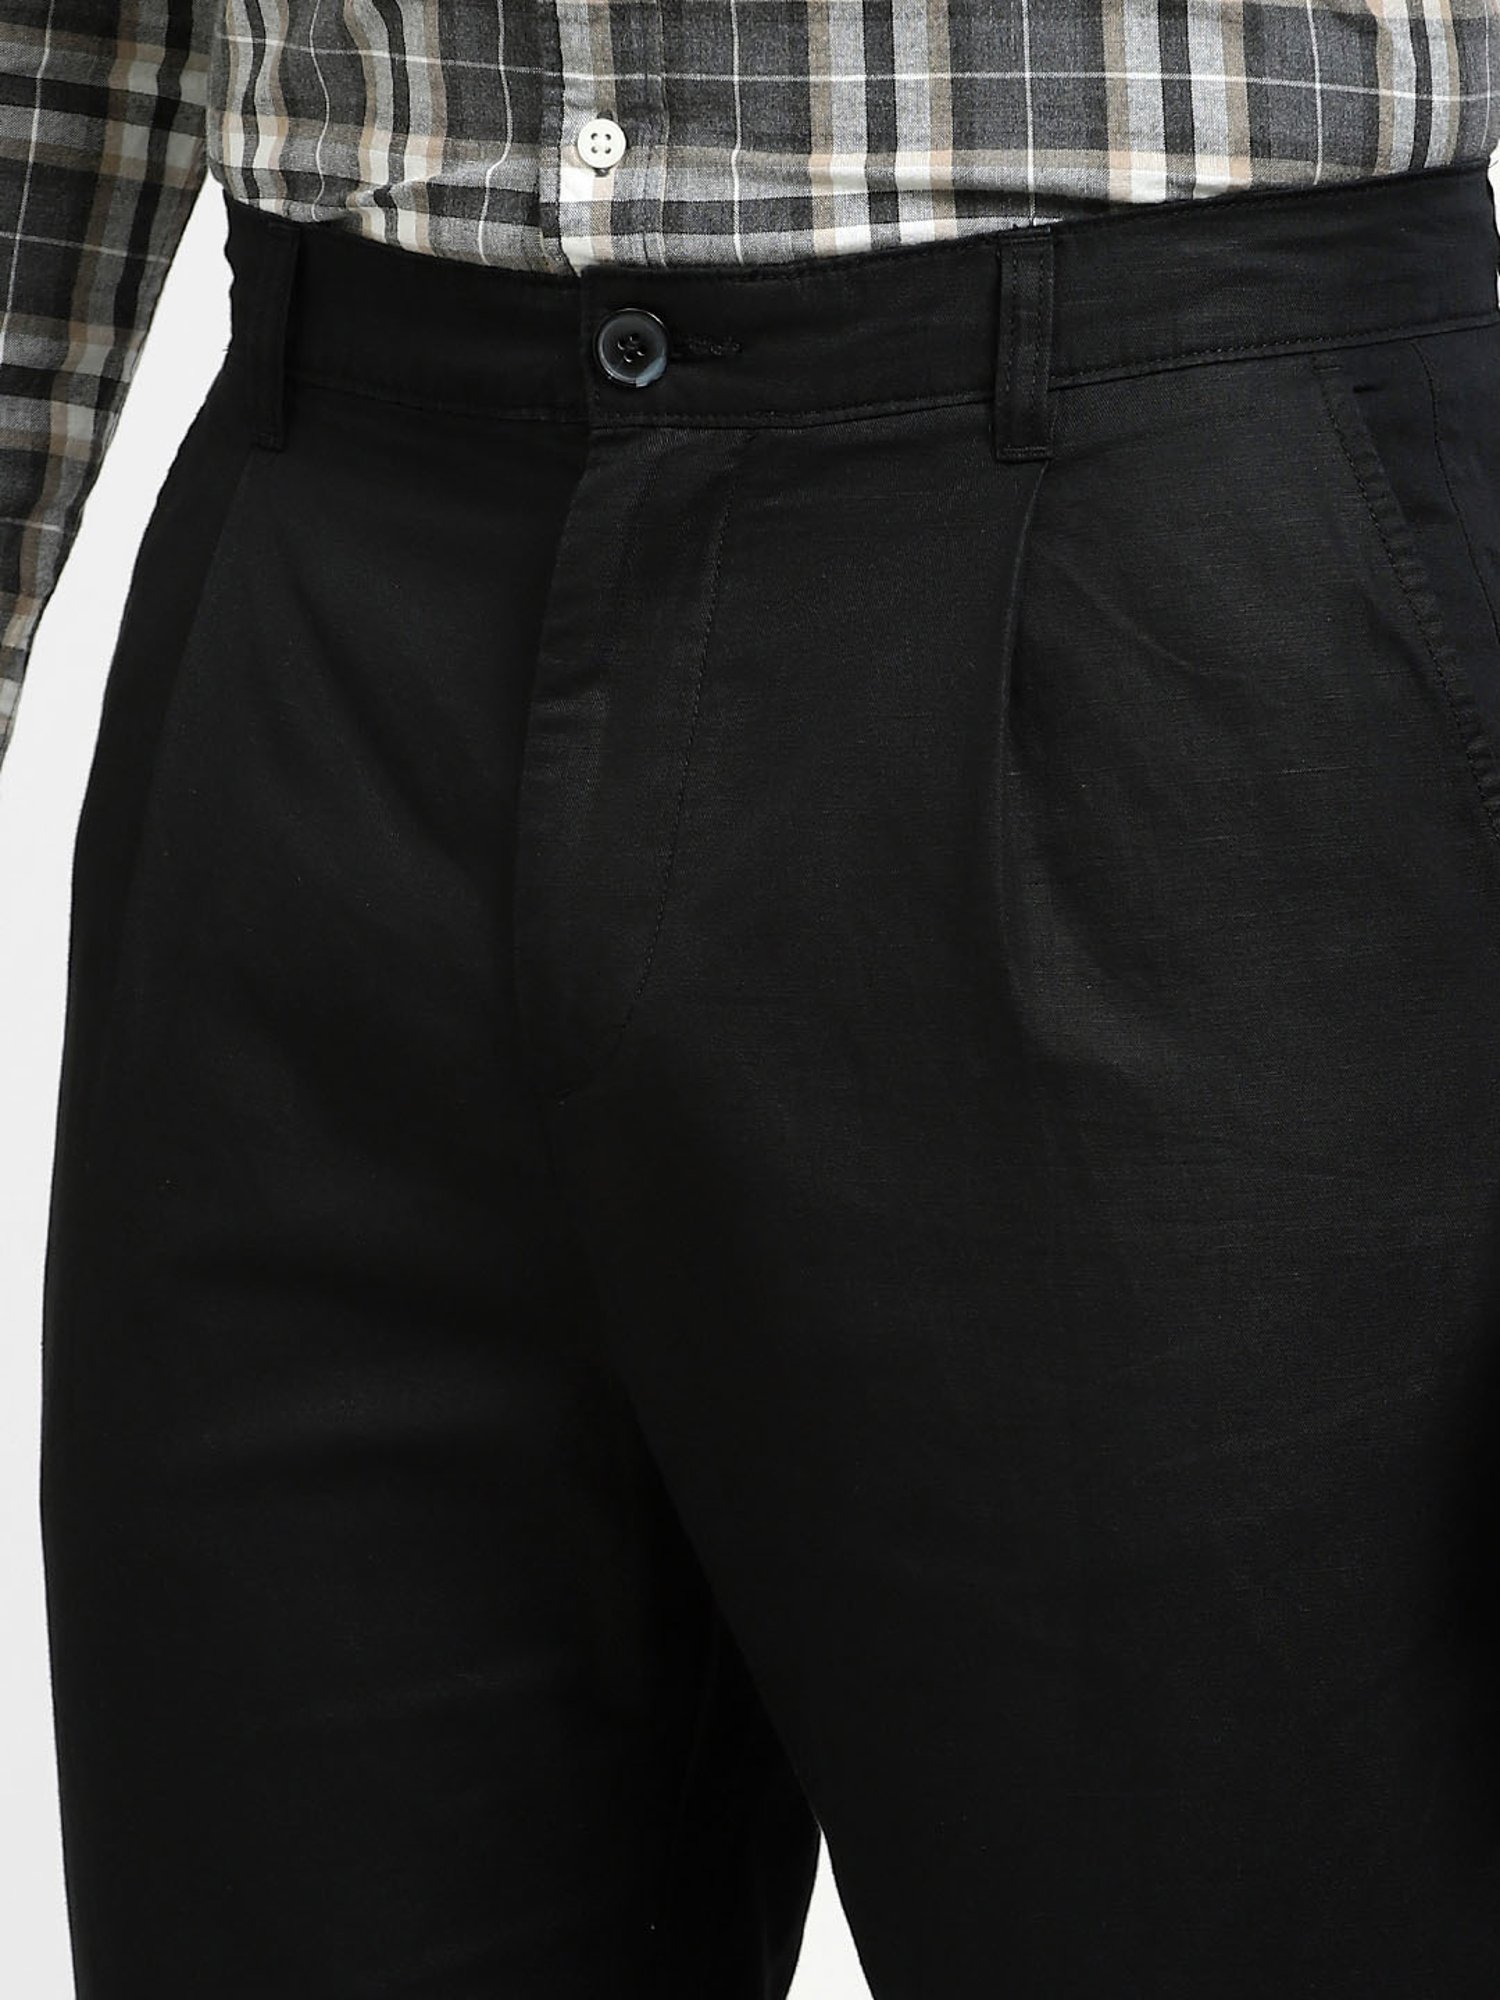 Black trouser styling - smart casual looks | Gallery posted by Lauren Seale  | Lemon8